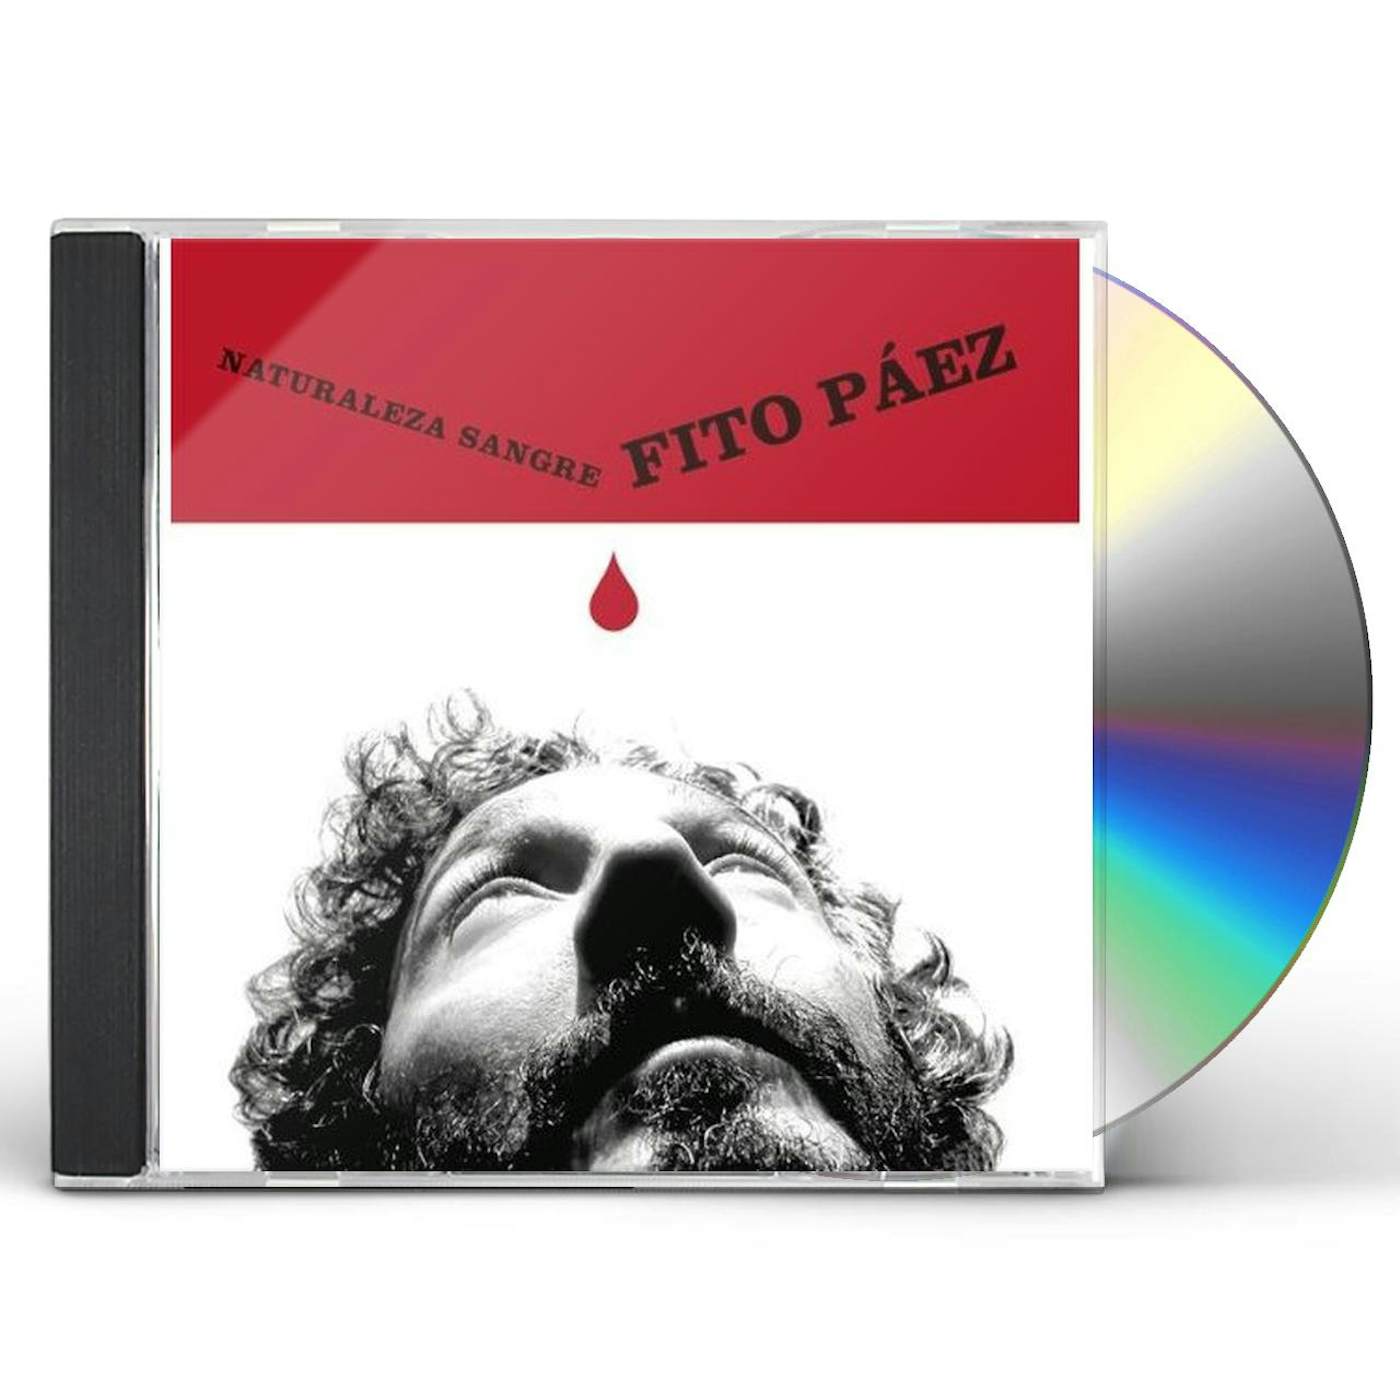 Fito Paez NATURALEZA SANGRE CD